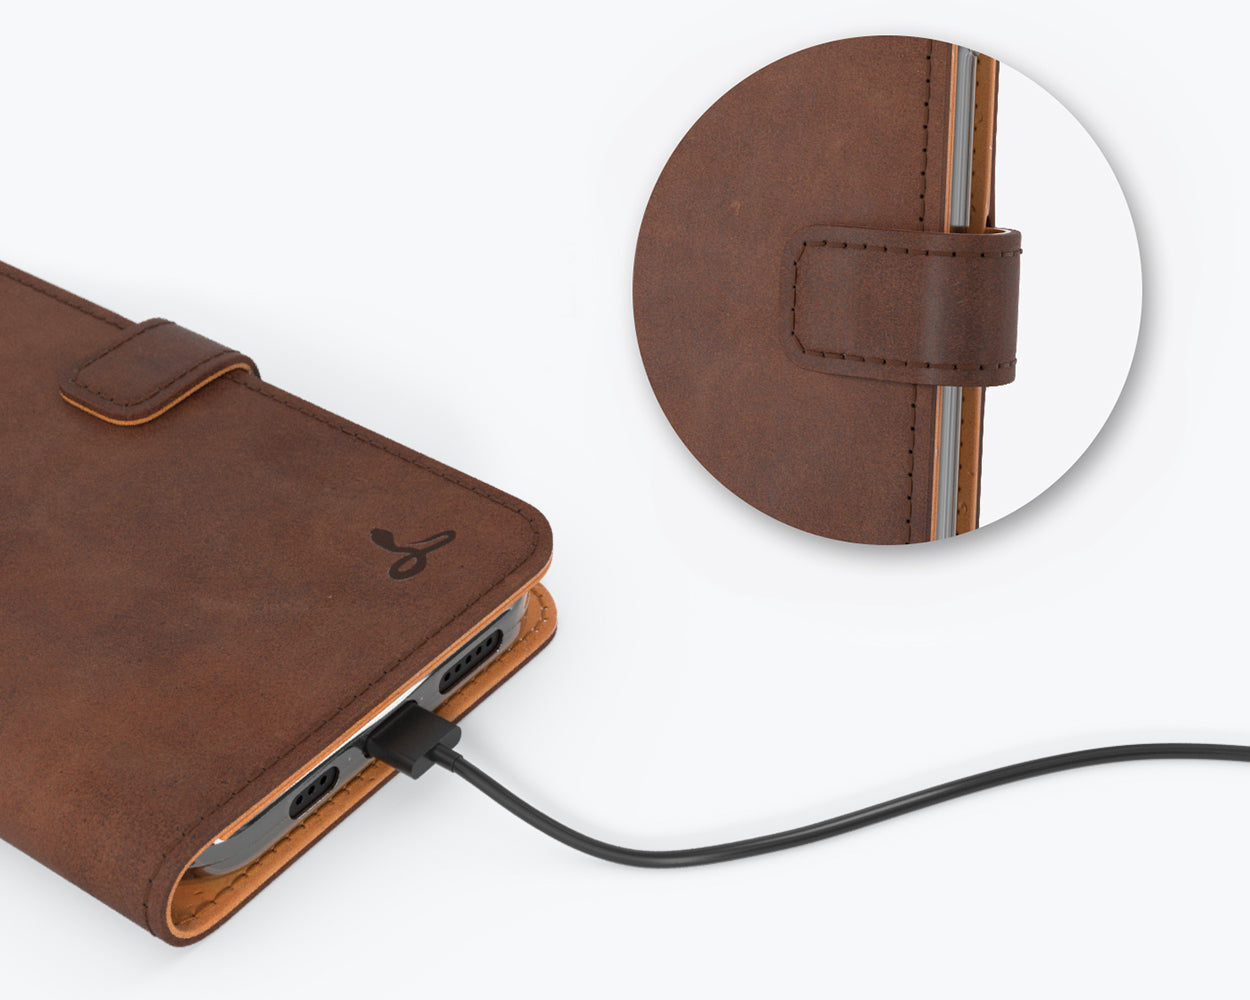 Vintage Leather Wallet - Apple iPhone 12 Pro